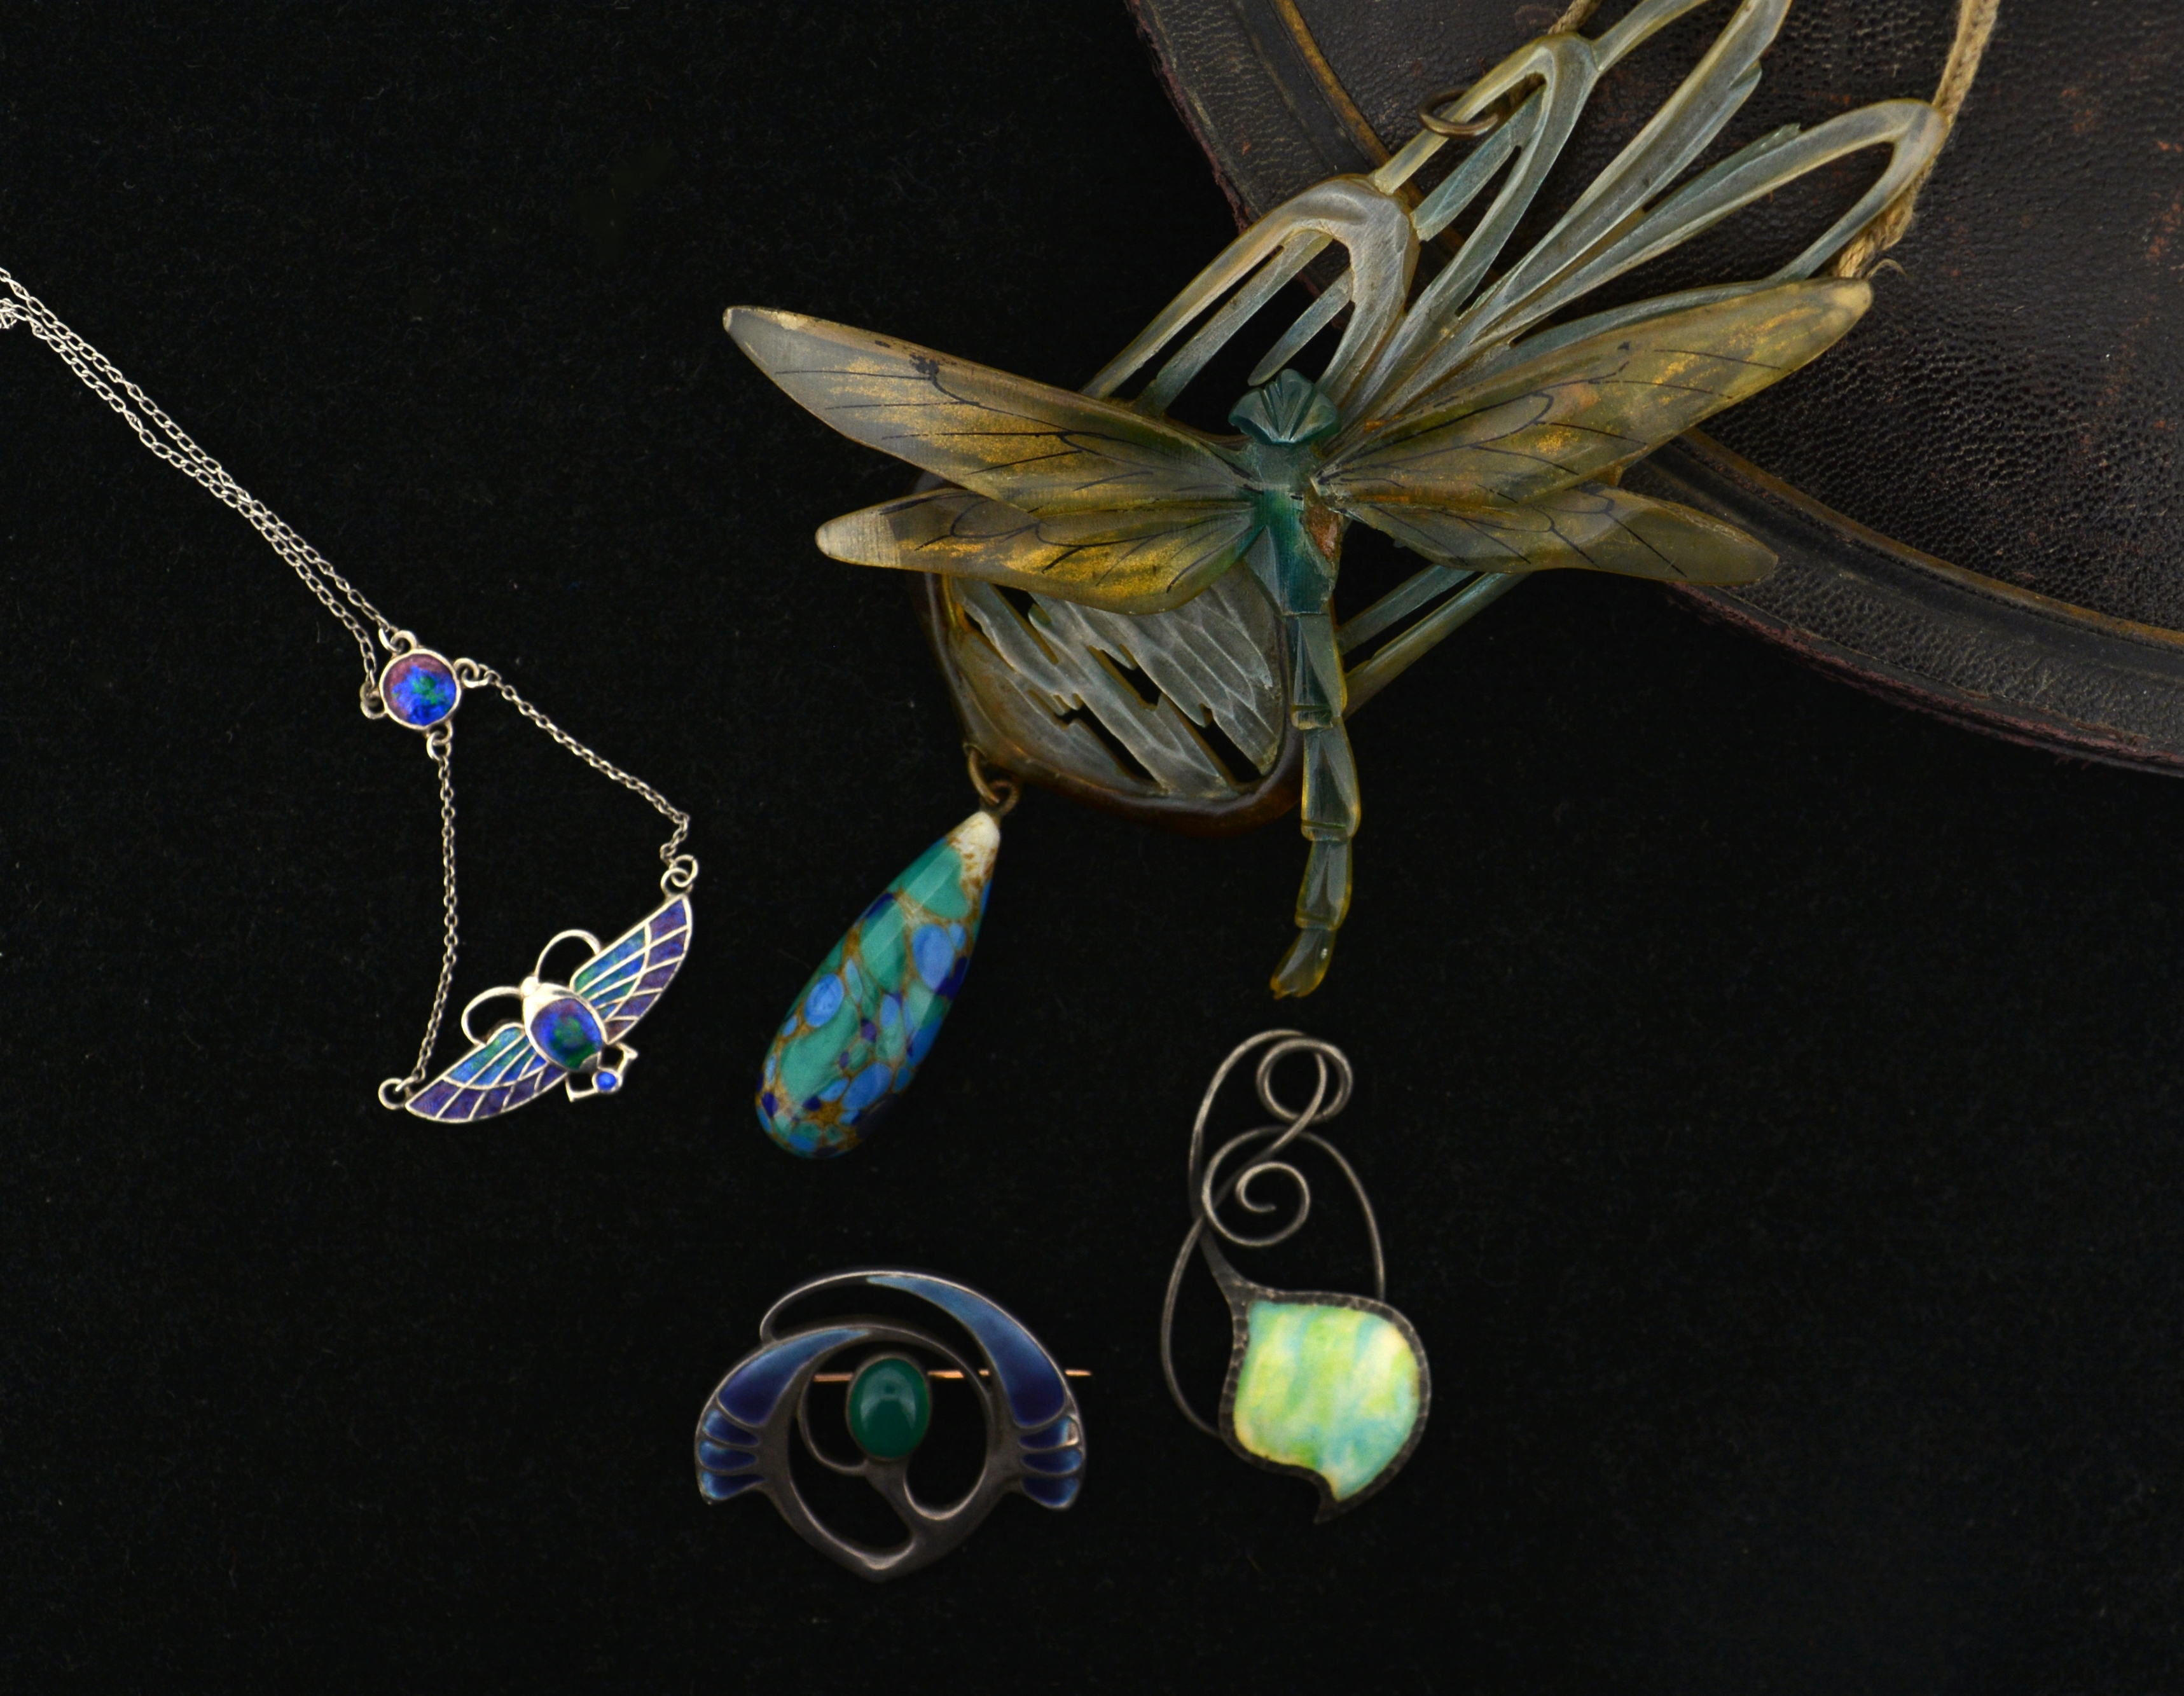 Buy Rare Art Nouveau Jewelry at Auction